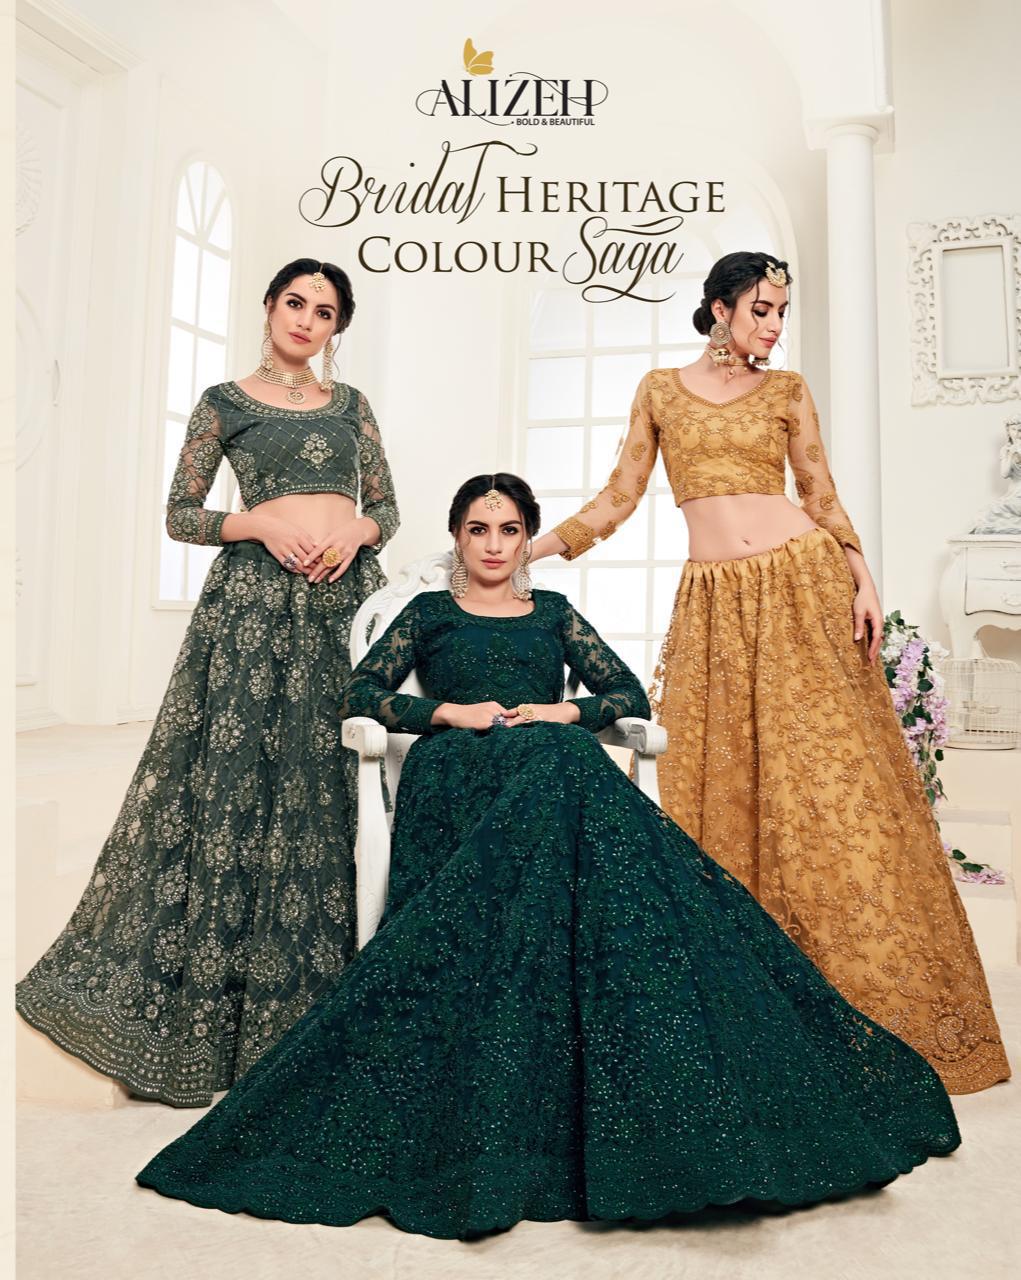 Alihez Bridal Heritage Colour Saga Wedding Designer Lehanga Catalogue